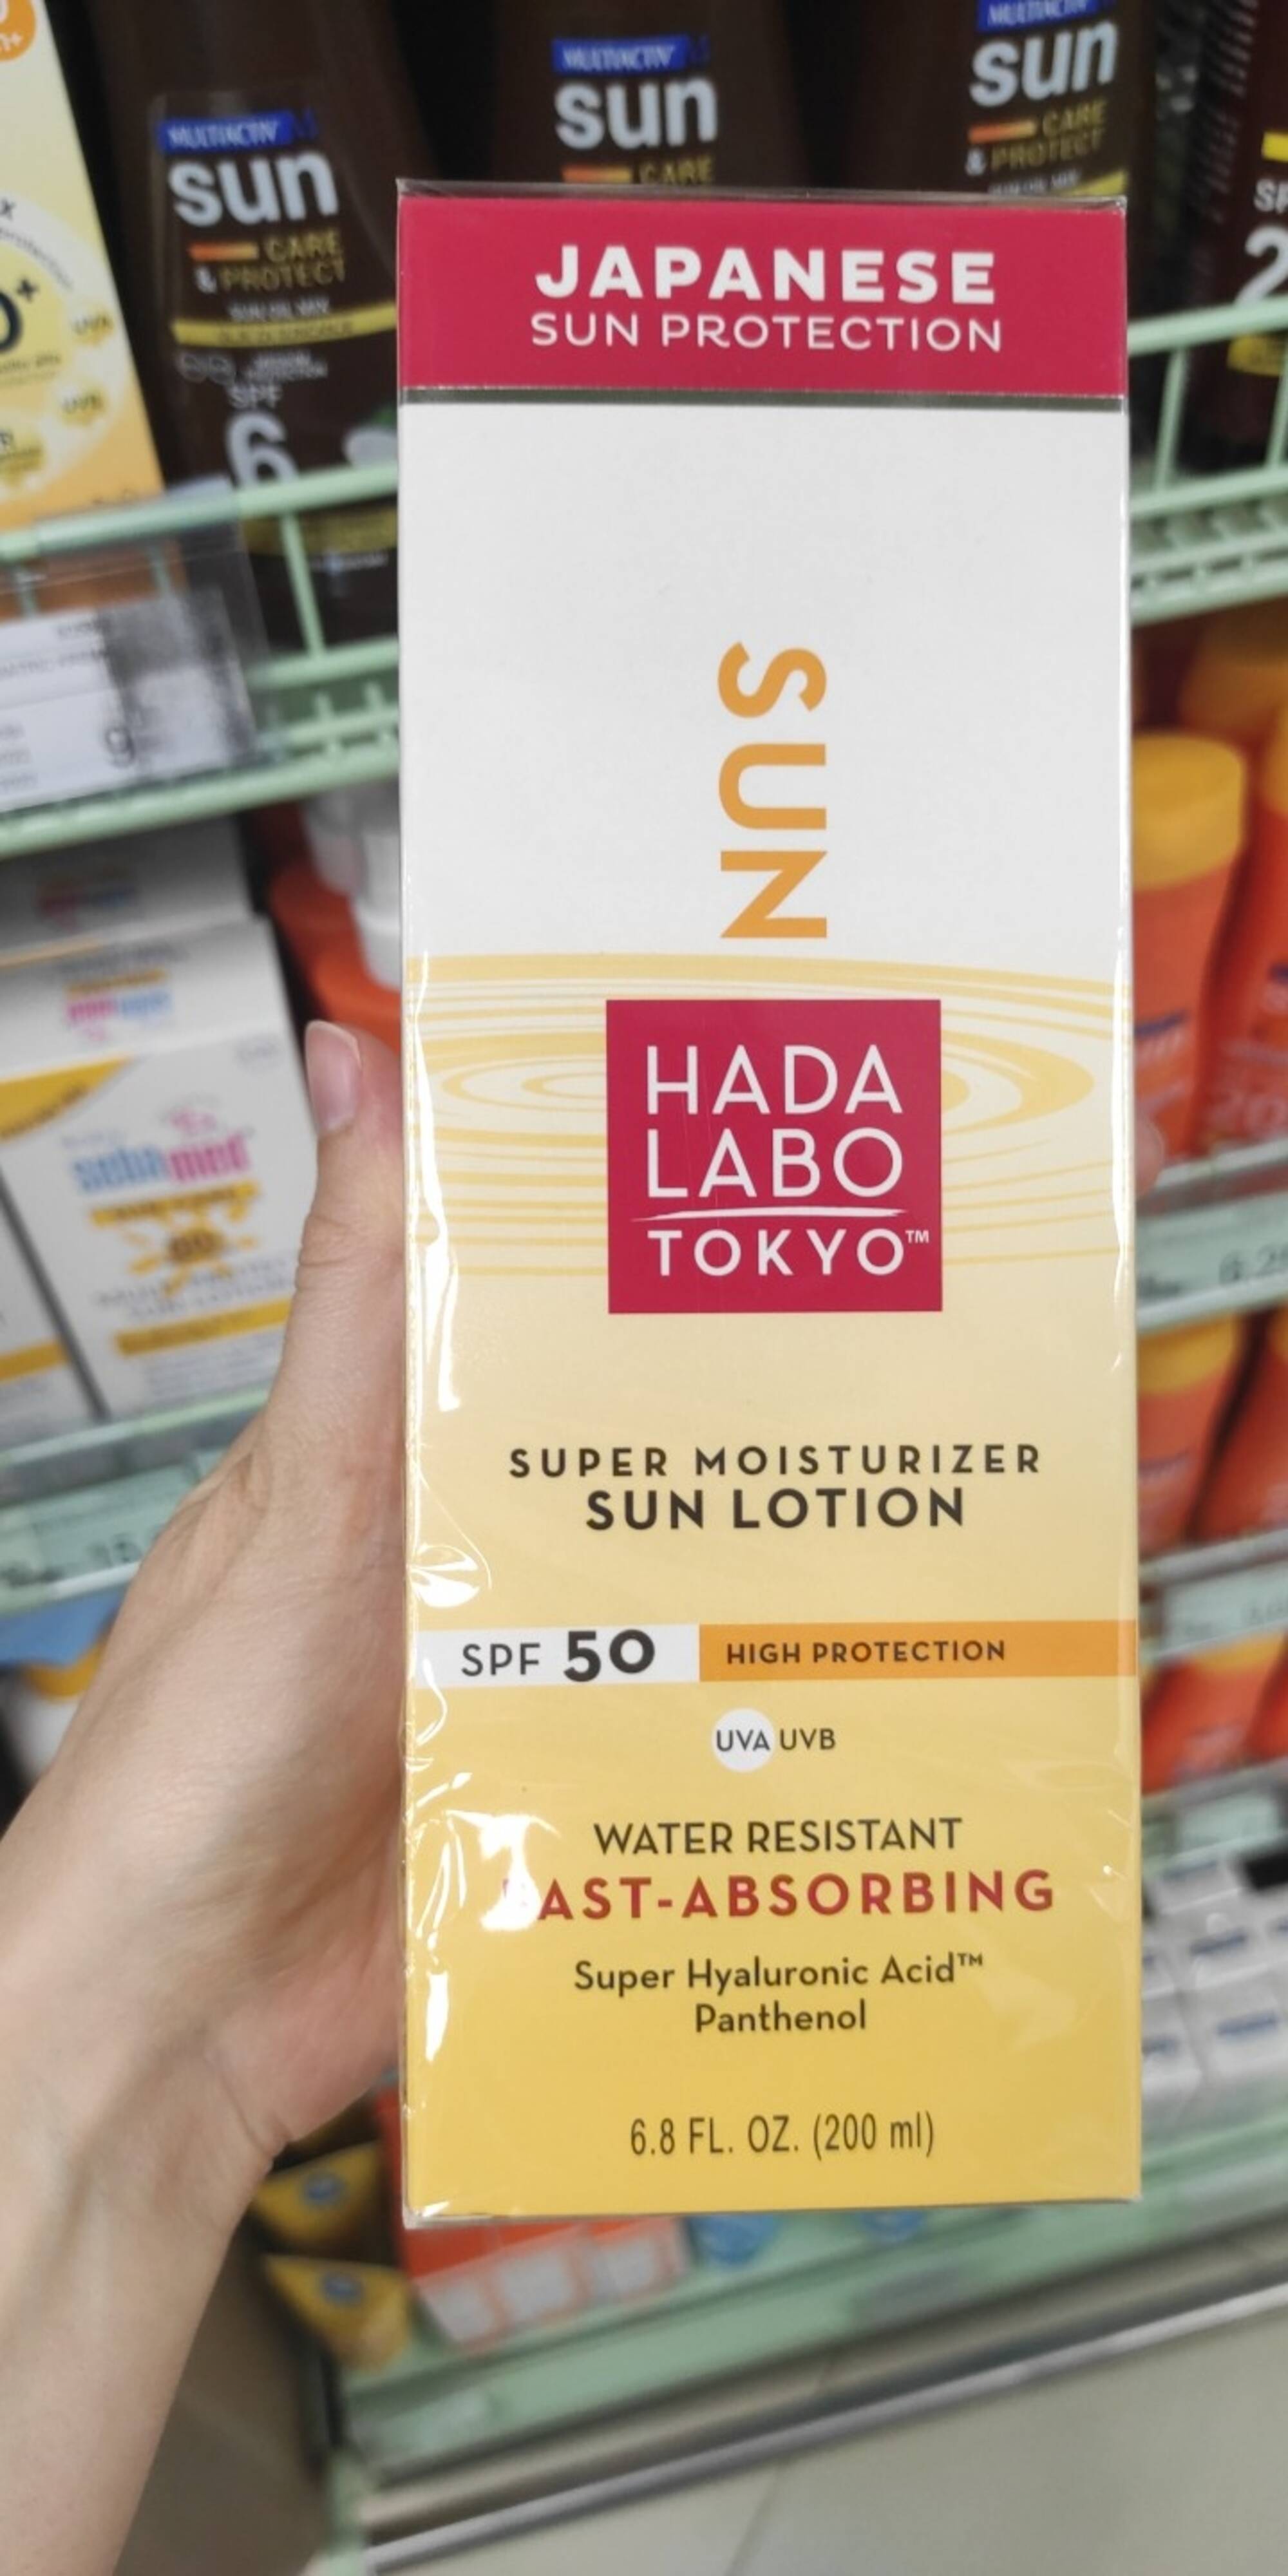 HADA LABO TOKYO - Super moisturizer - Sun lotion SPF 50